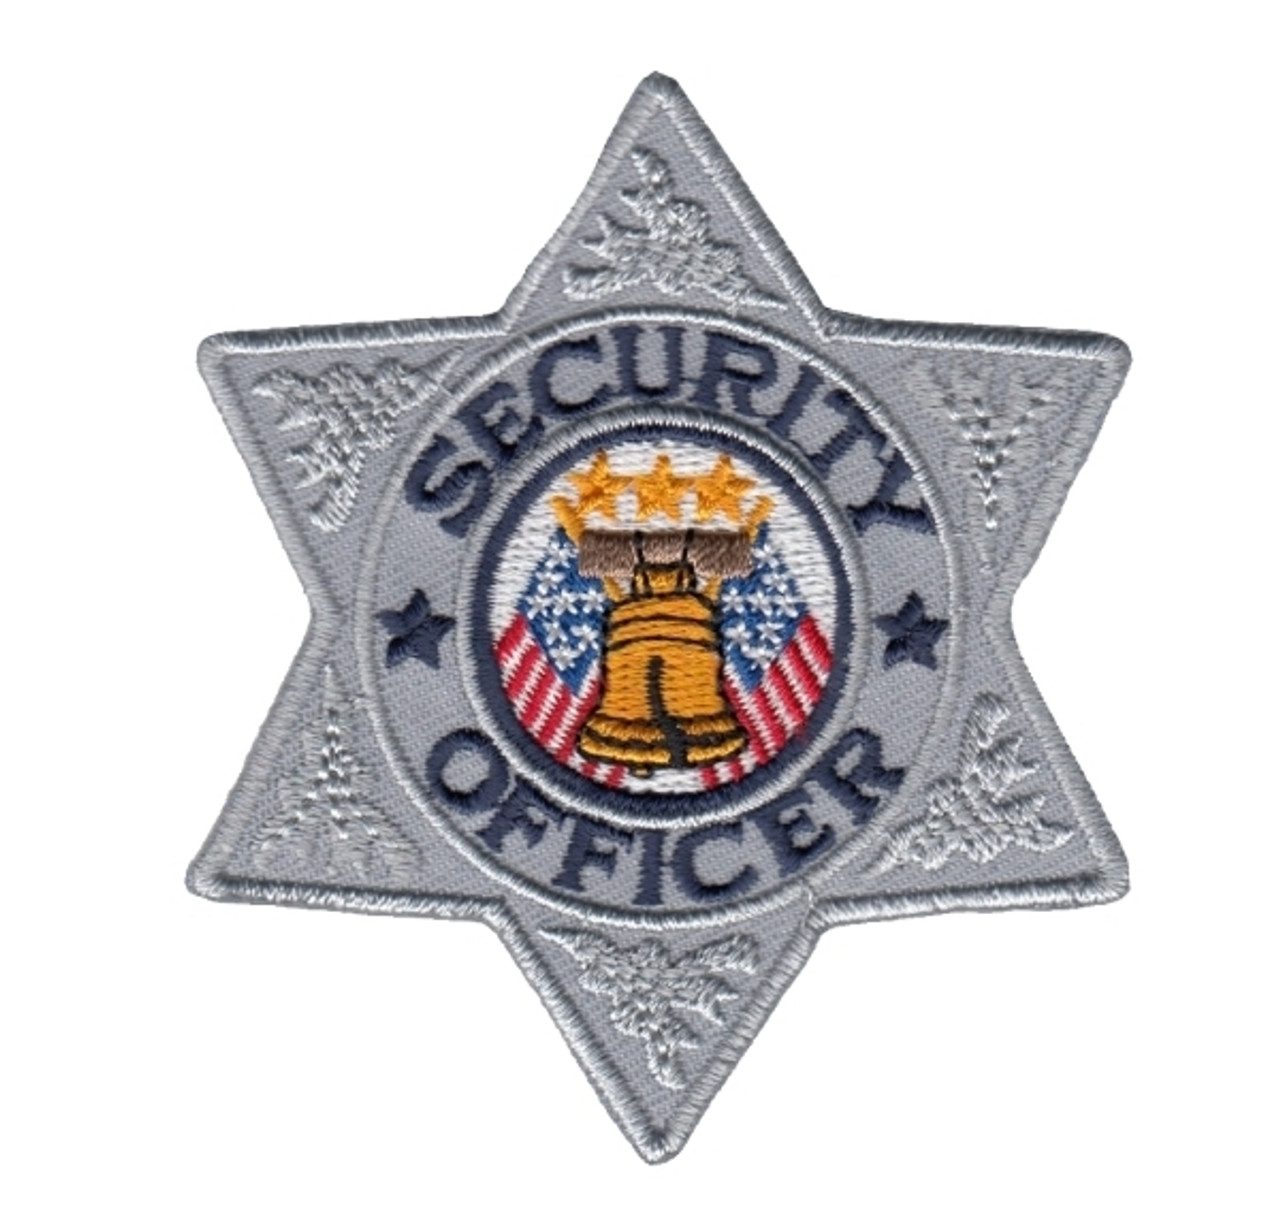 SECURITY OFFICER Shoulder Patch, 4-3/4x3-3/4 - Hero's Pride